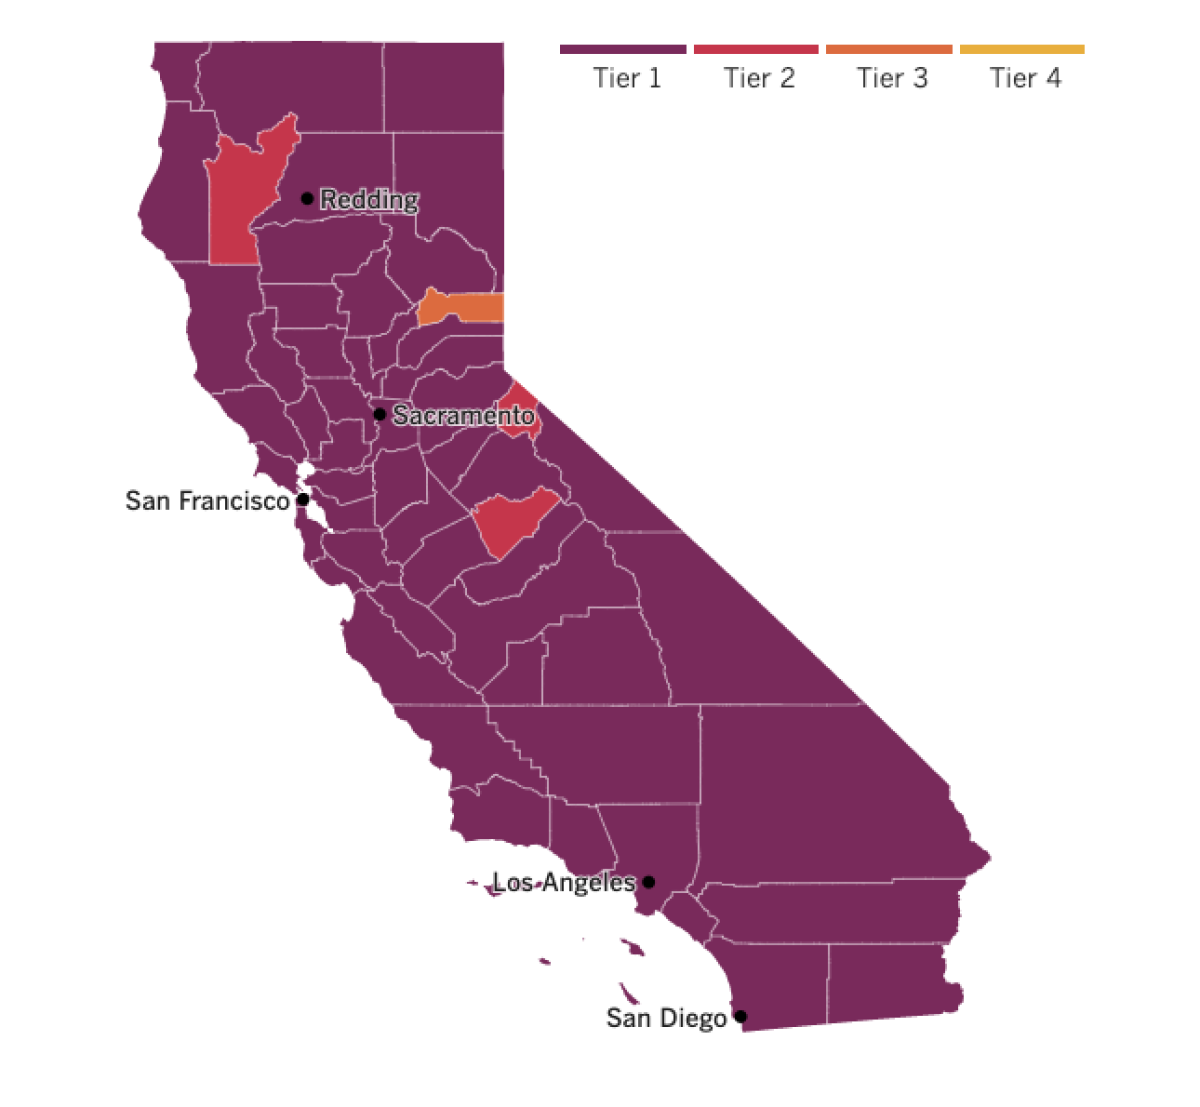 California tiers map 01-25